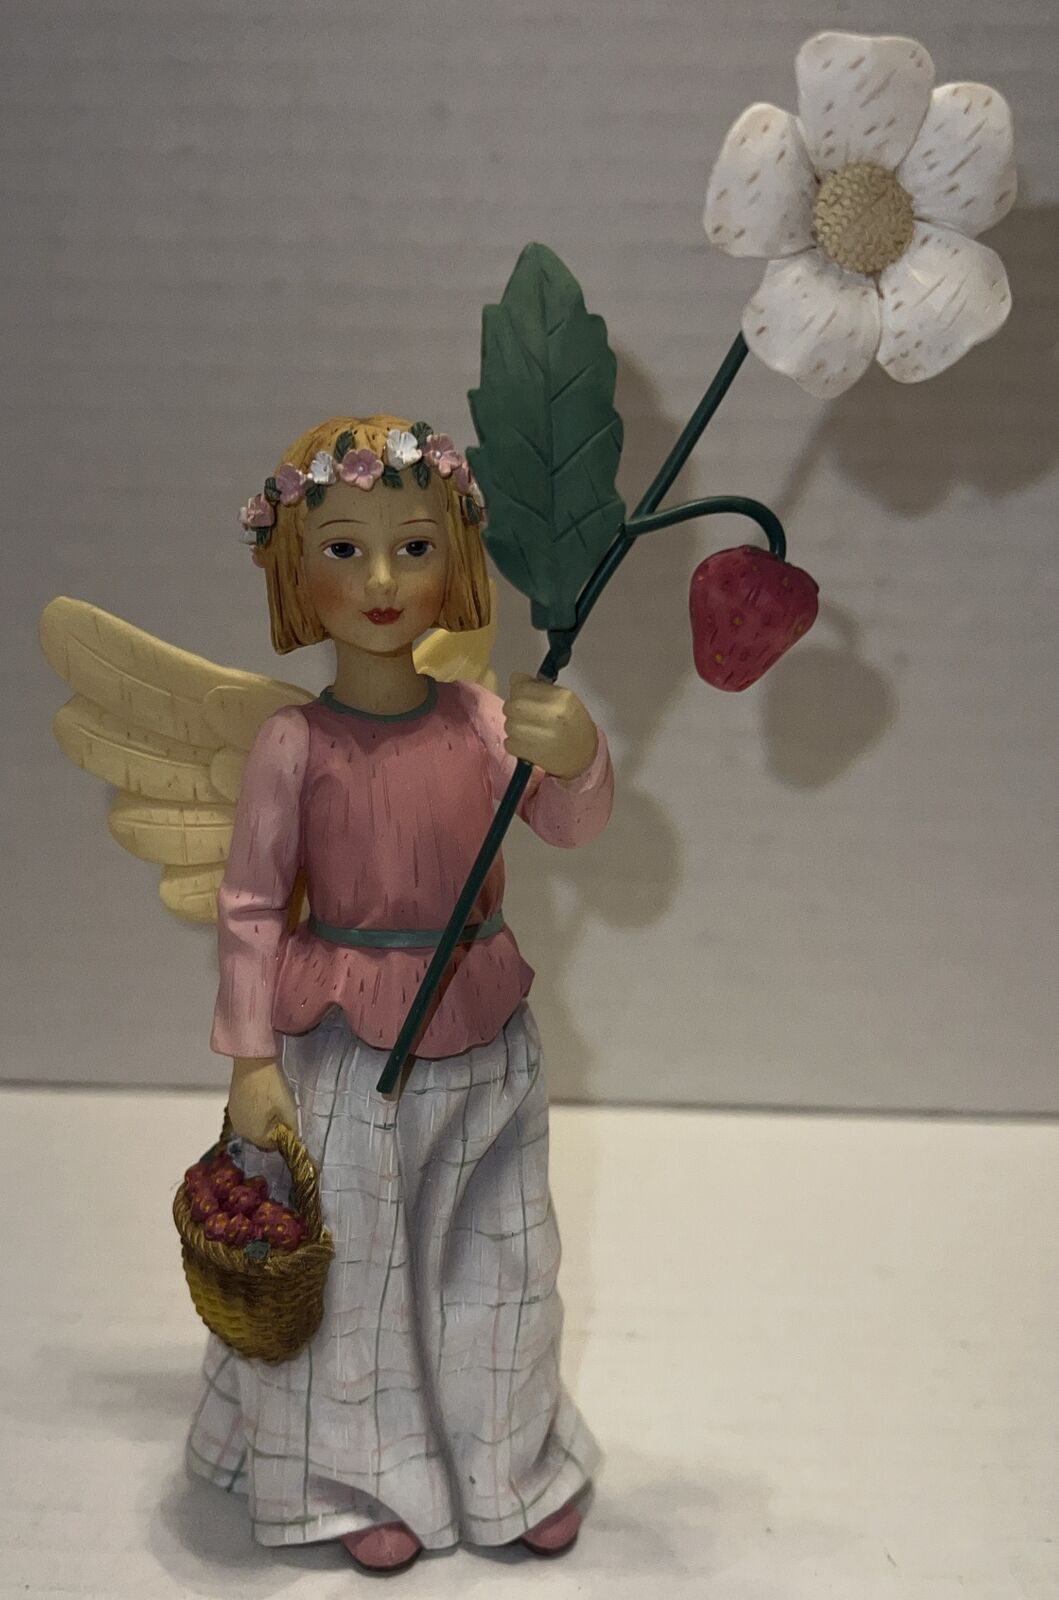 Demdaco Wildflower Angels Strawberries for Goodness figurine Kathy Killip 2002